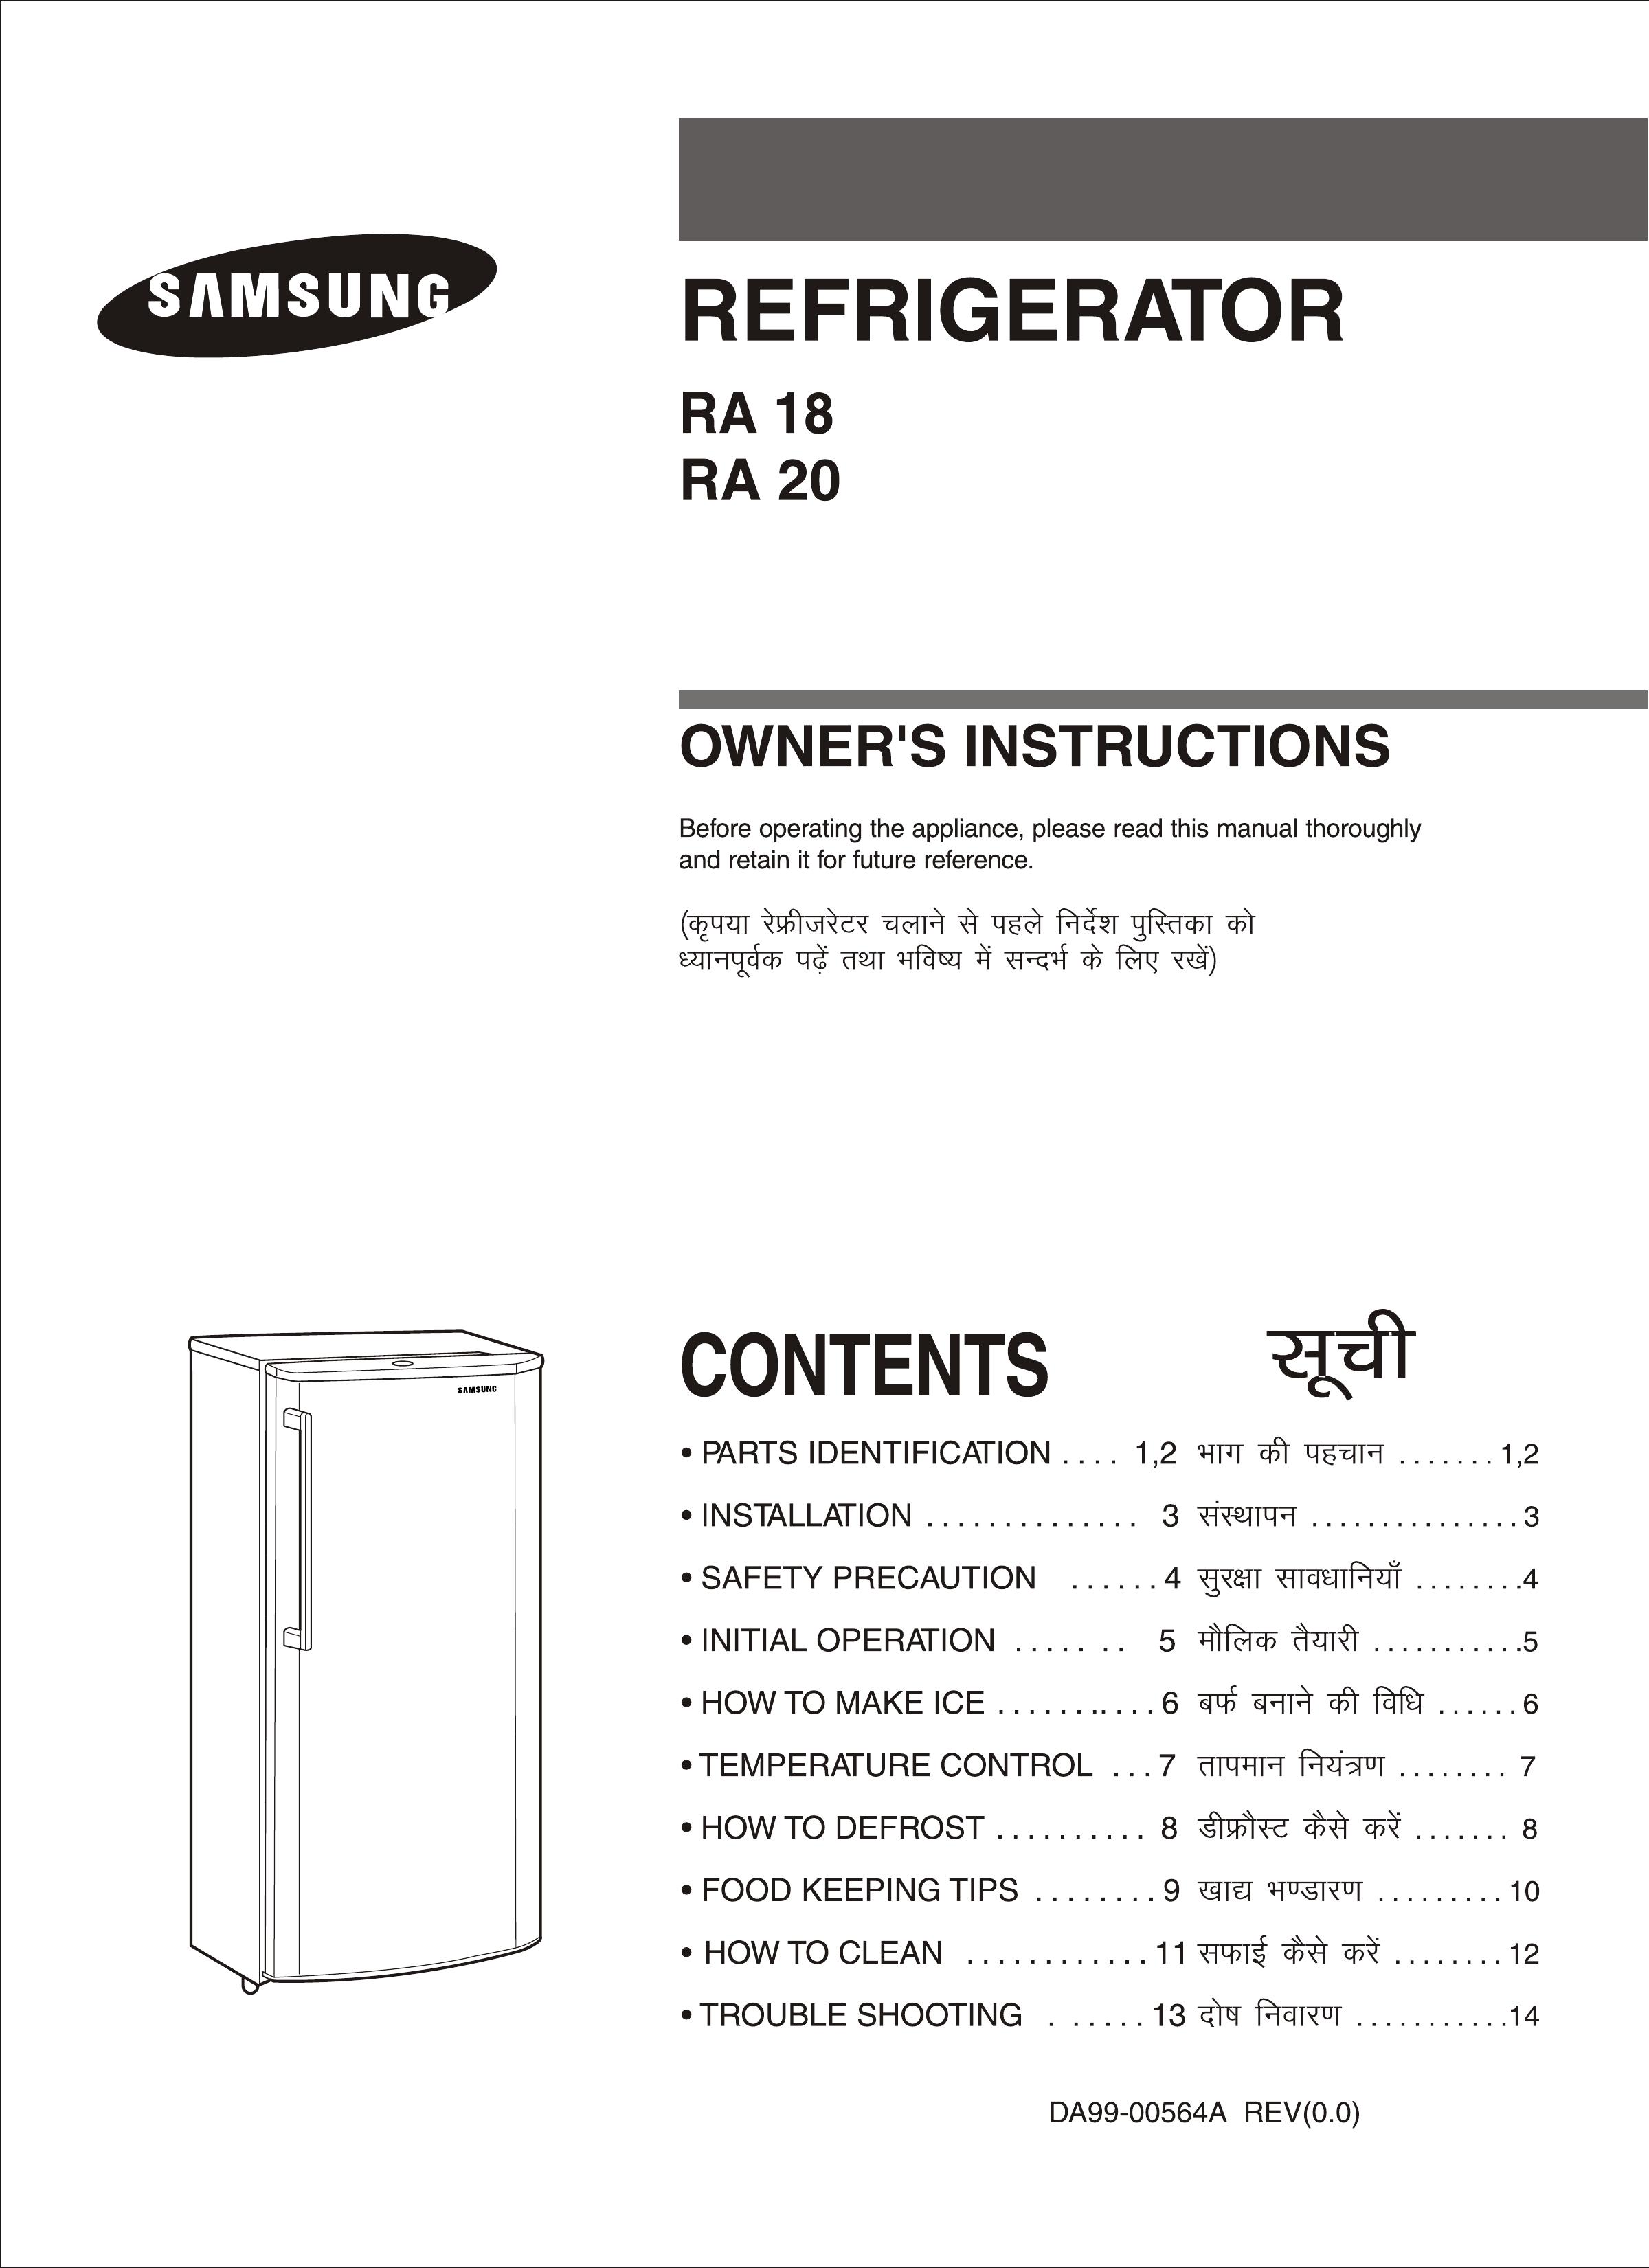 Samsung RA 20 Refrigerator User Manual